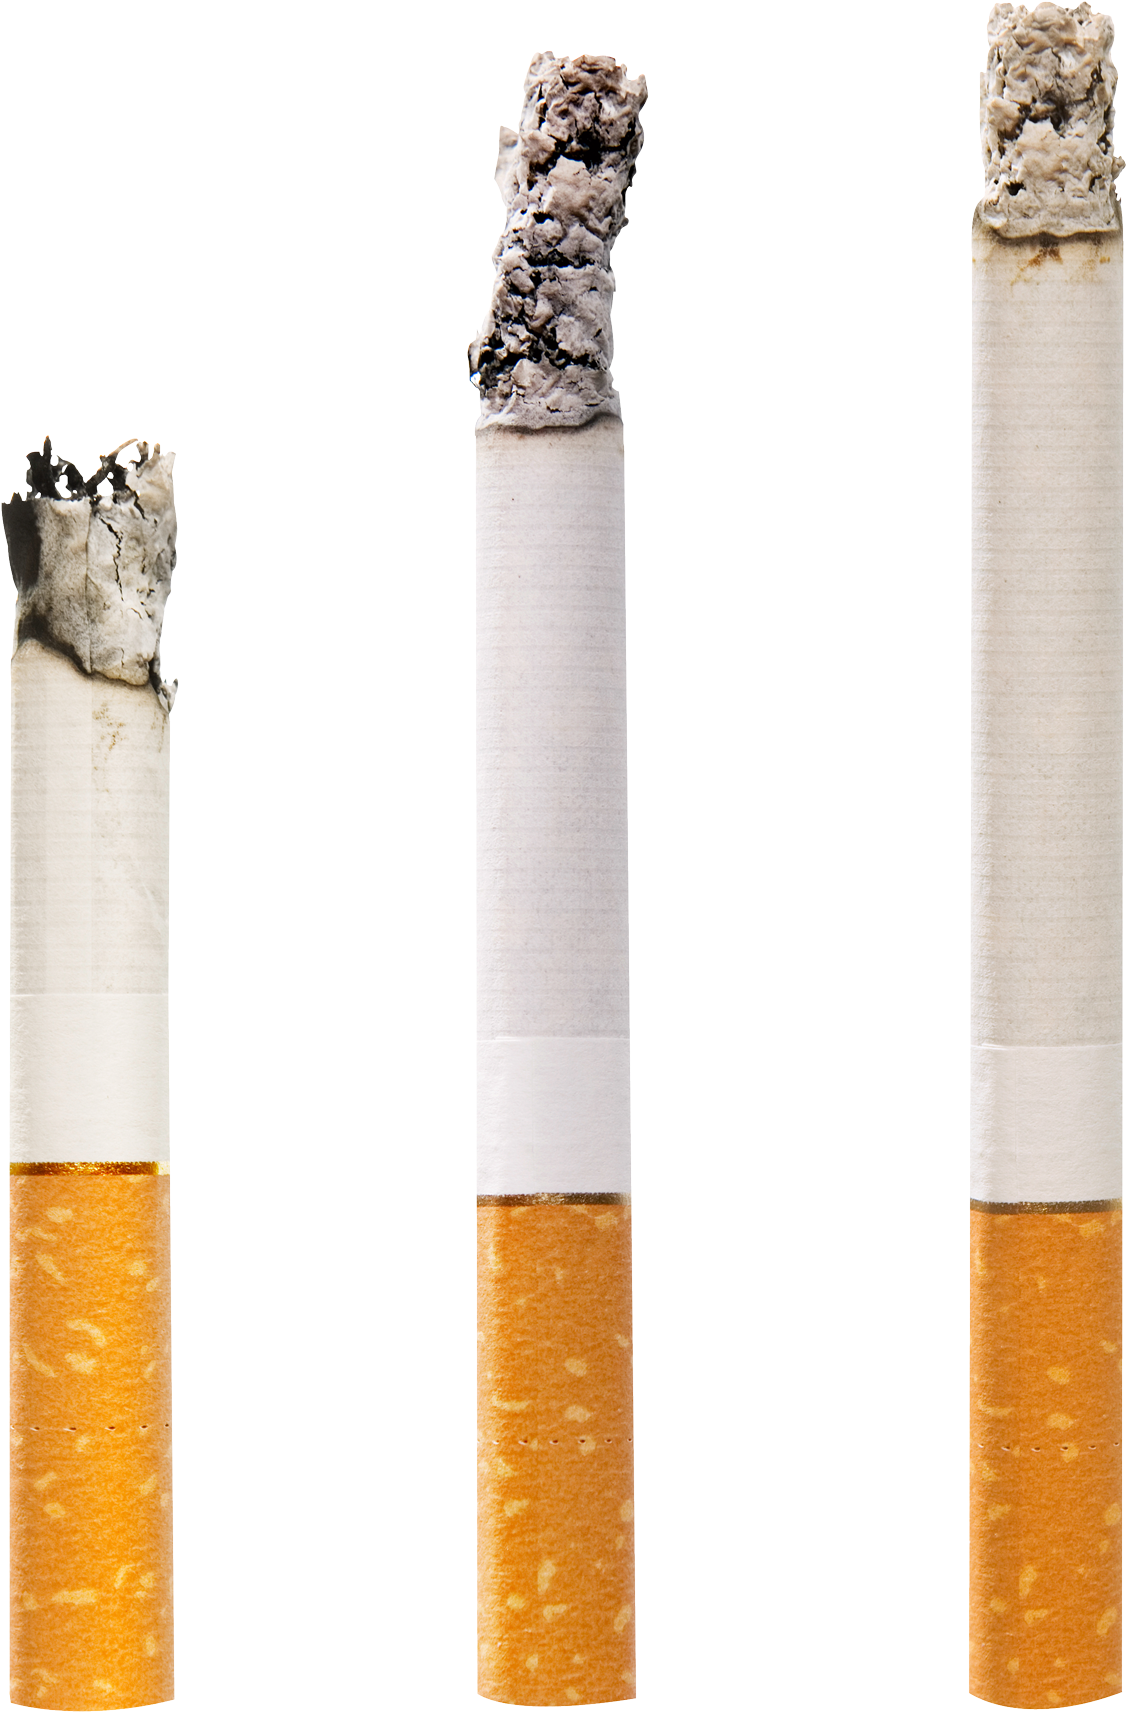 A Close Up Of A Cigarette